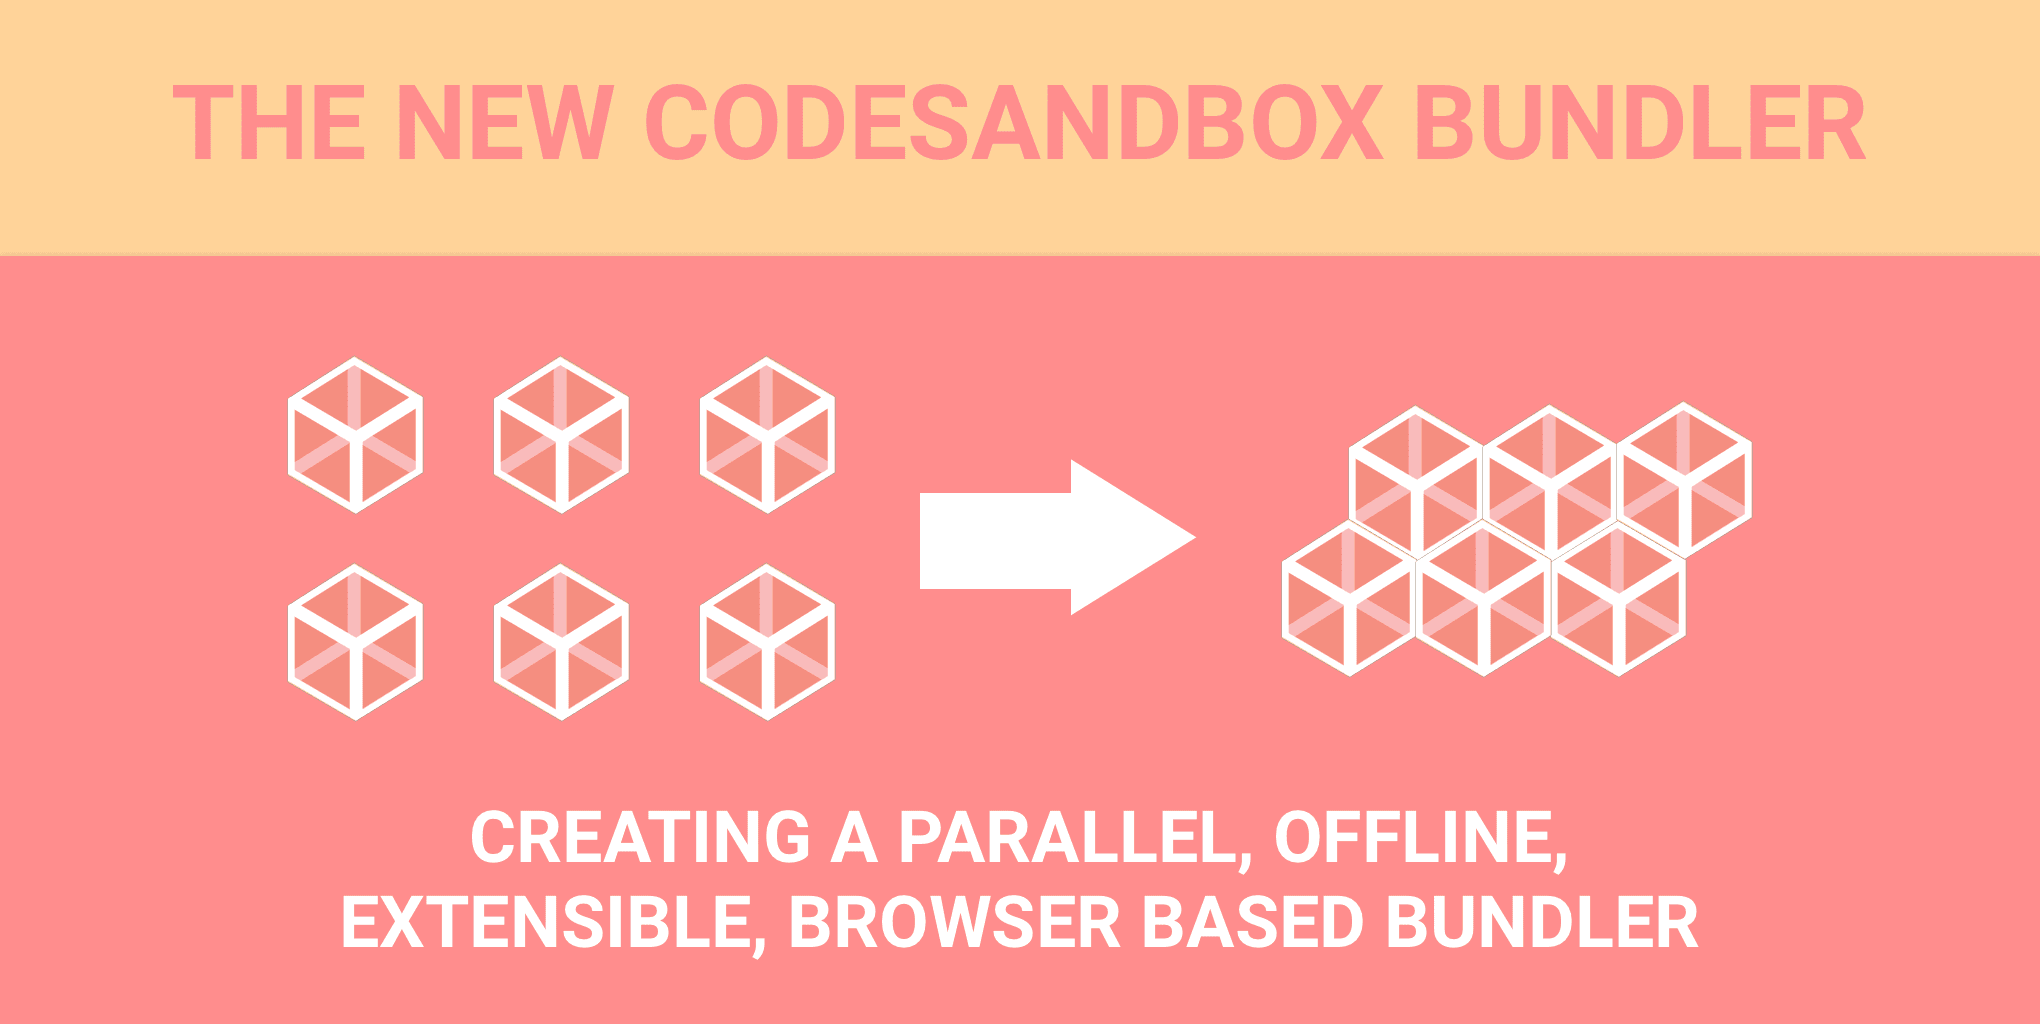 Creating a parallel, offline, extensible, browser based bundler for CodeSandbox